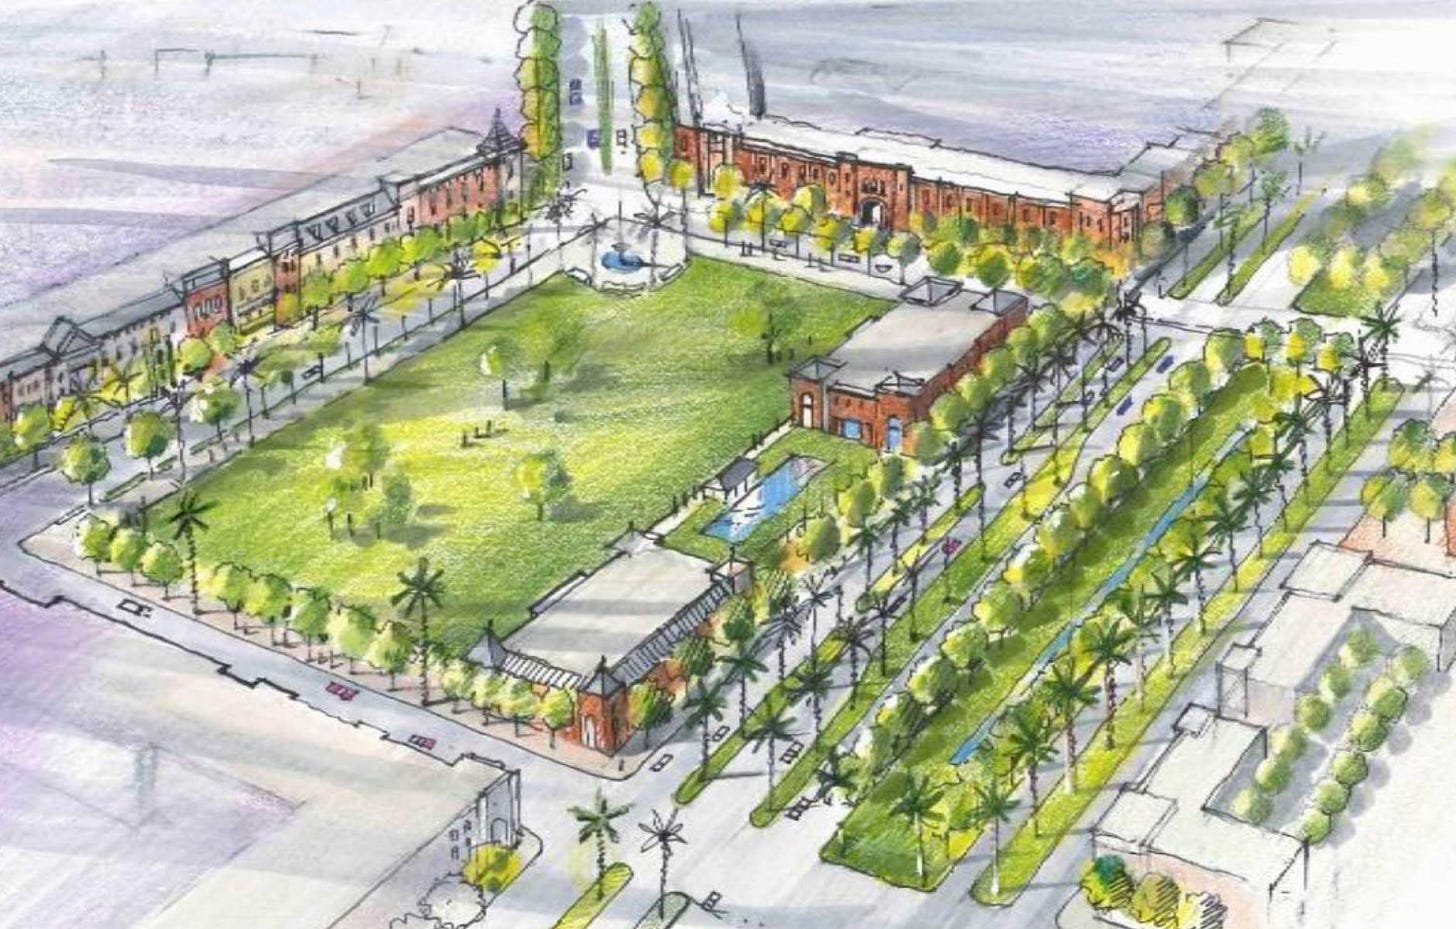 Plan to retrofit suburban to mixed-use urban | CNU